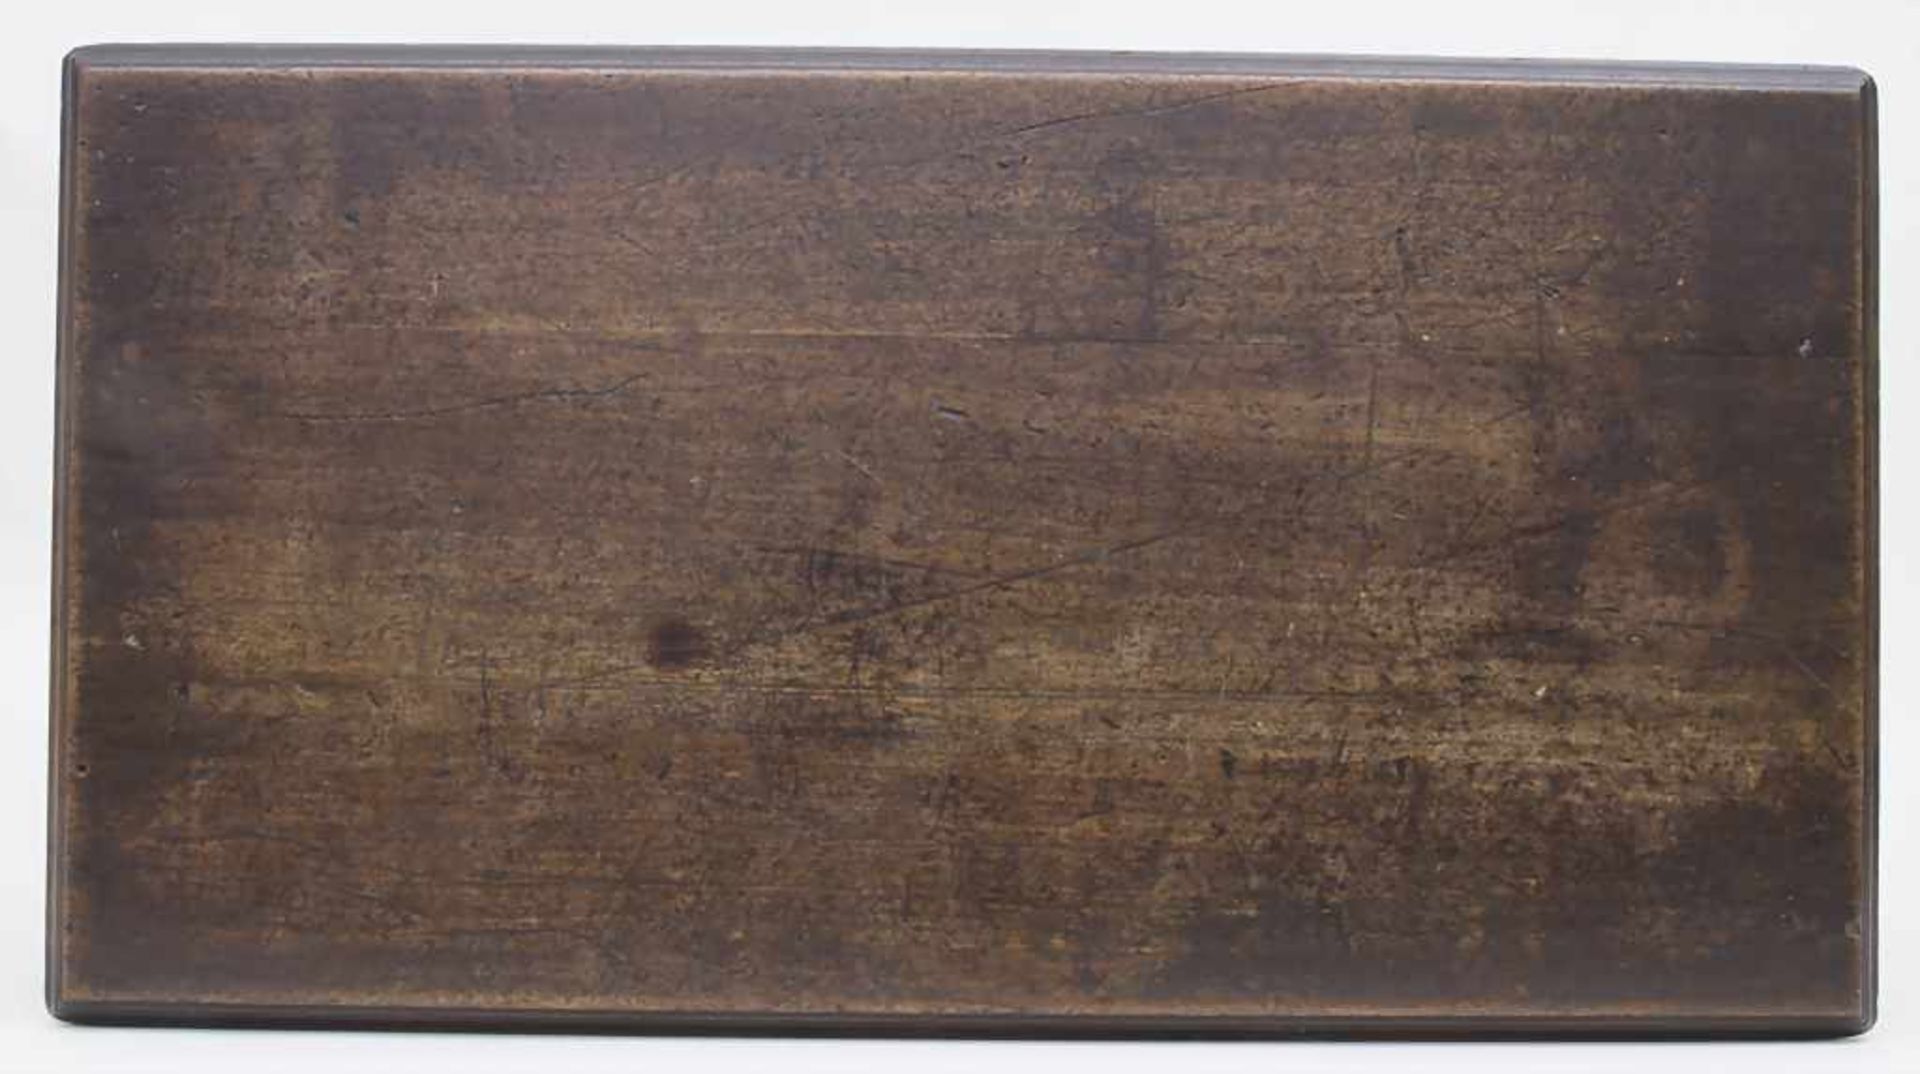 Tee Tisch / A tea table, Frankreich, 19. Jh.Material: gemasertes Holz, dunkel gebeizt, Maße: 51 x 83 - Image 3 of 3